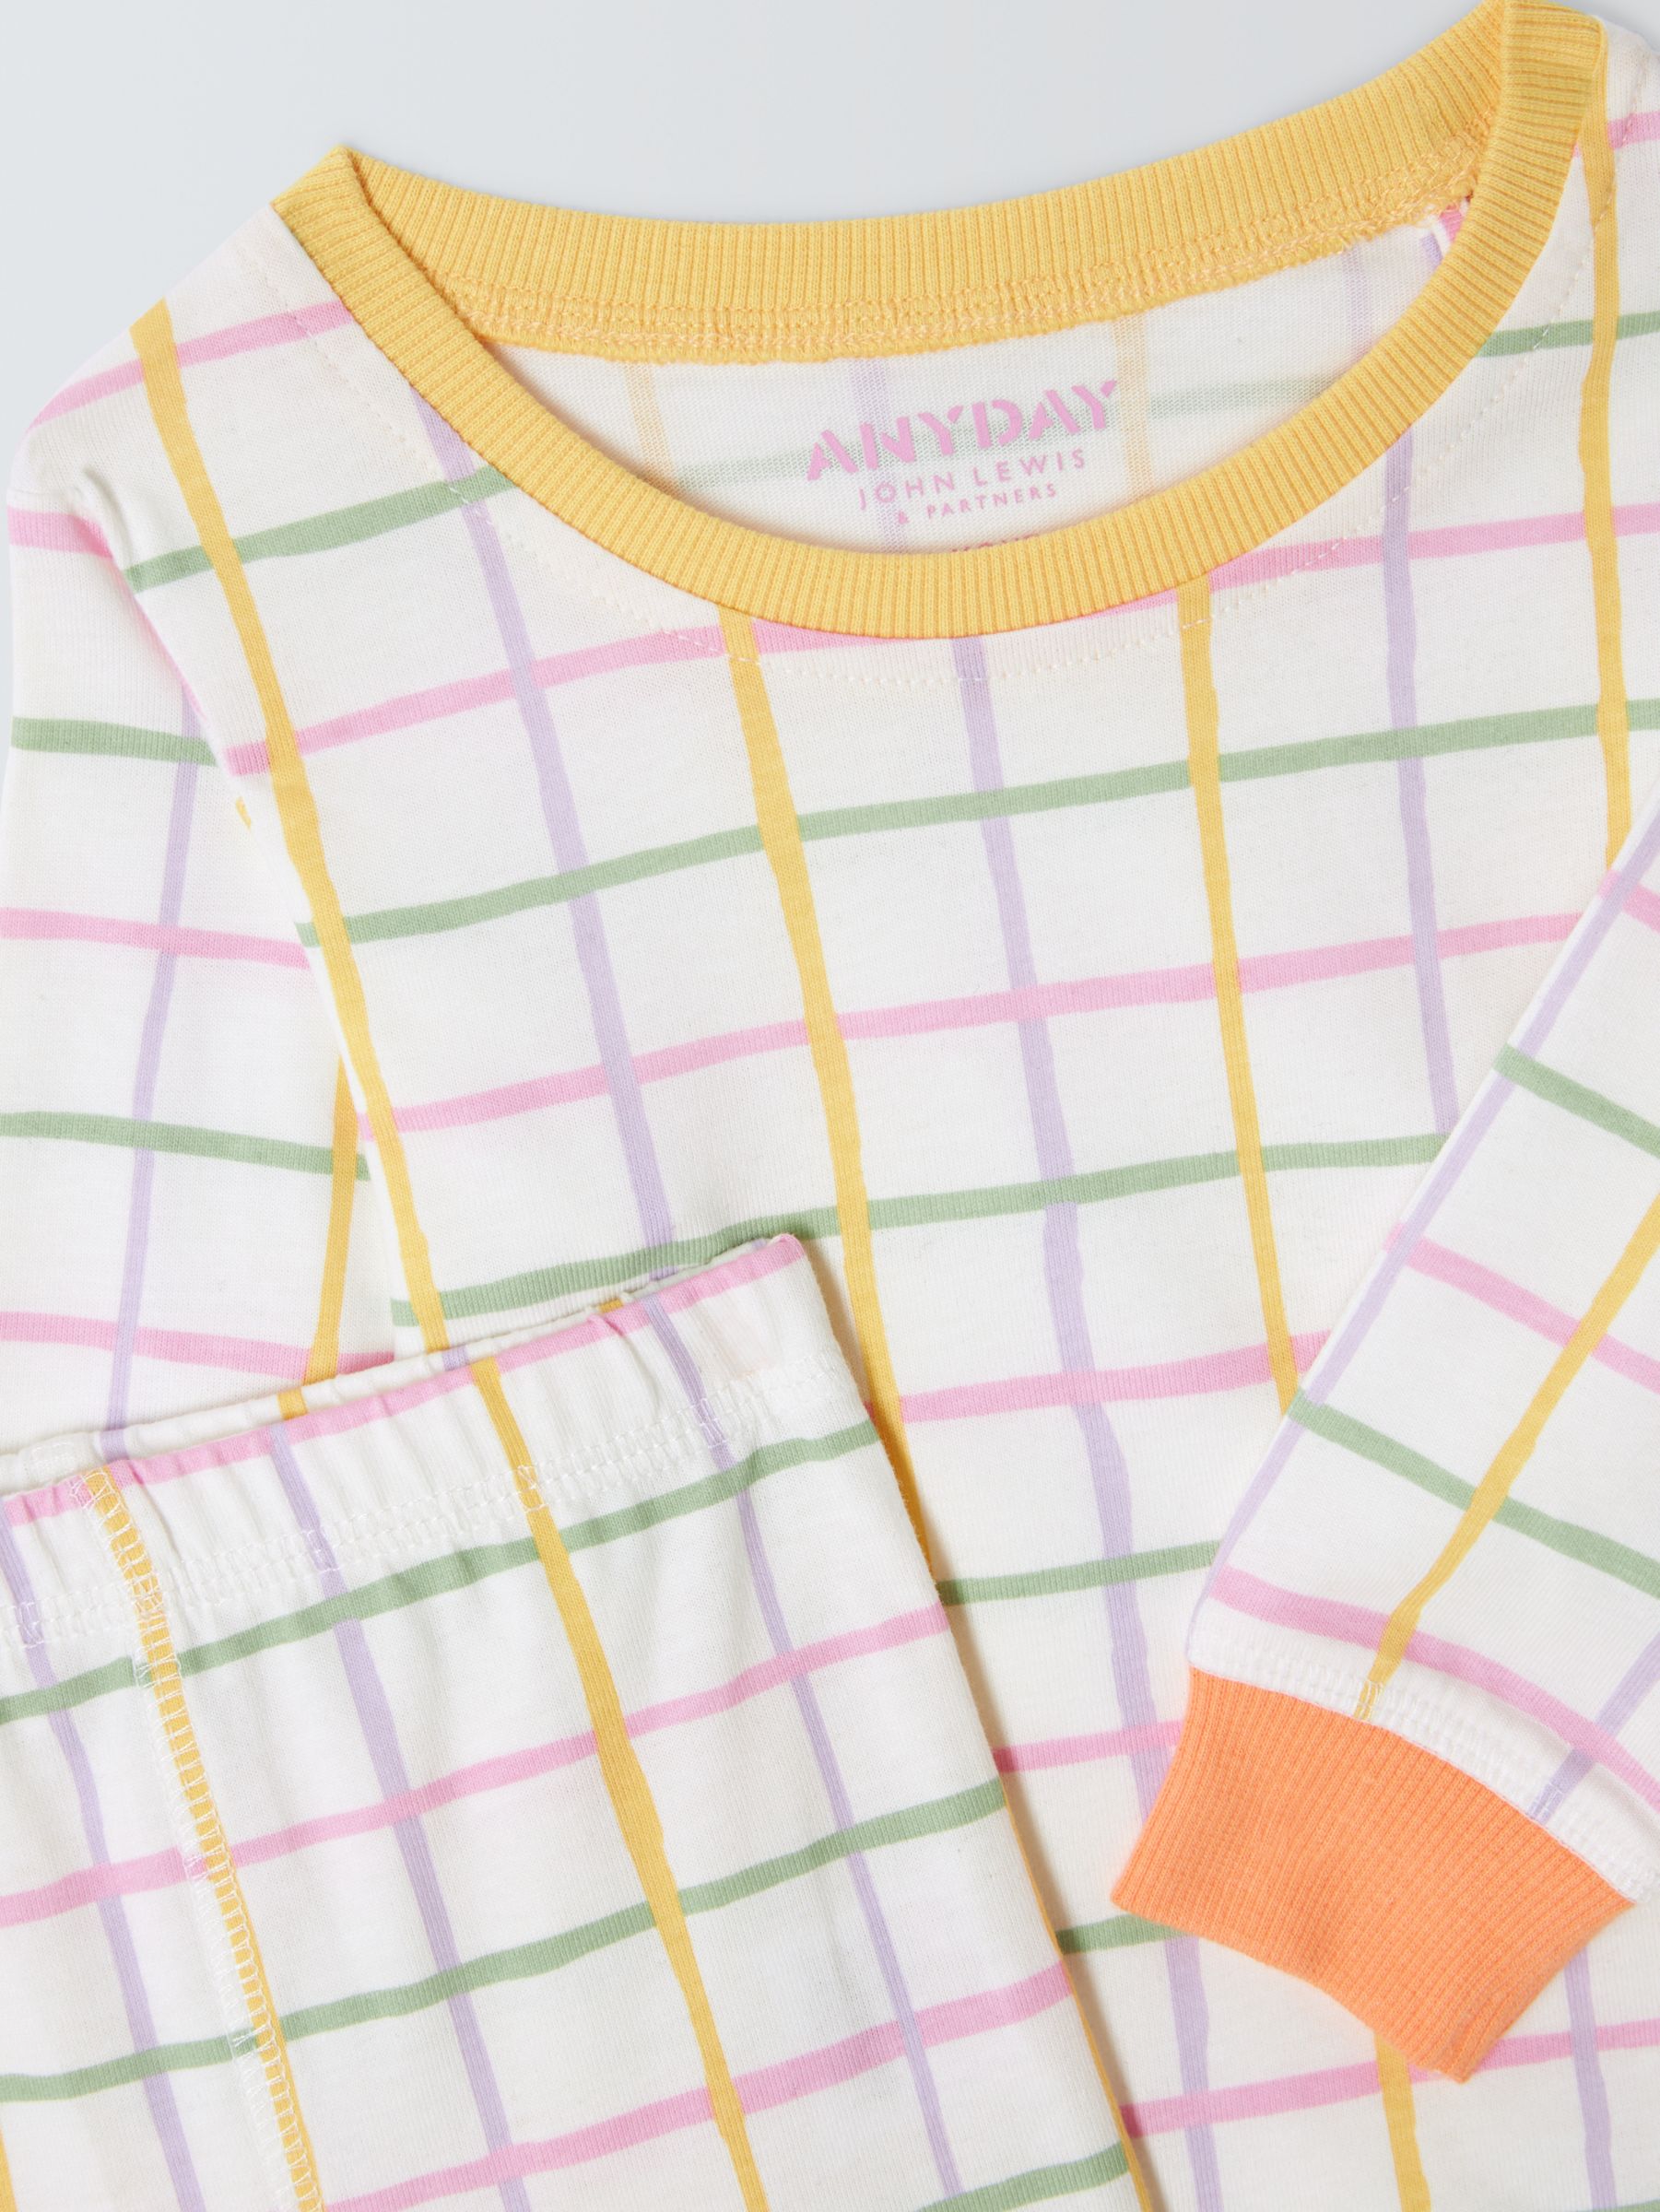 Buy John Lewis ANYDAY Baby Gardenia Check Pyjamas, Multi Online at johnlewis.com